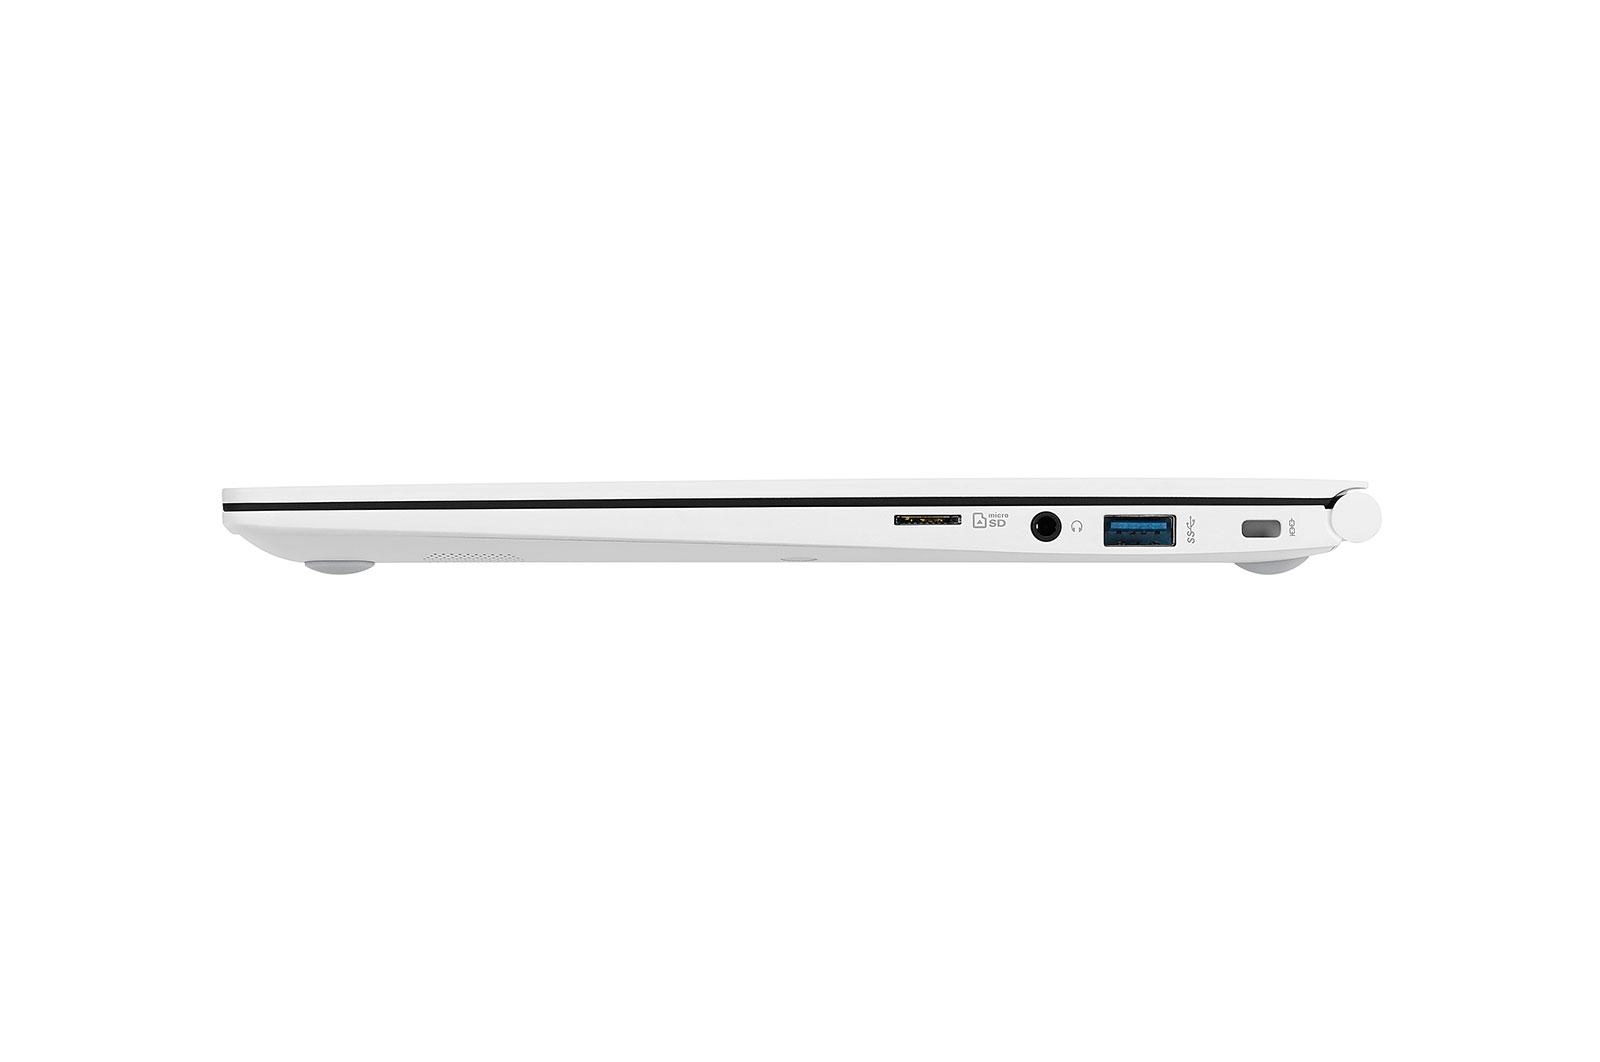 LG 13Z990-U.AAW5U1 laptop image